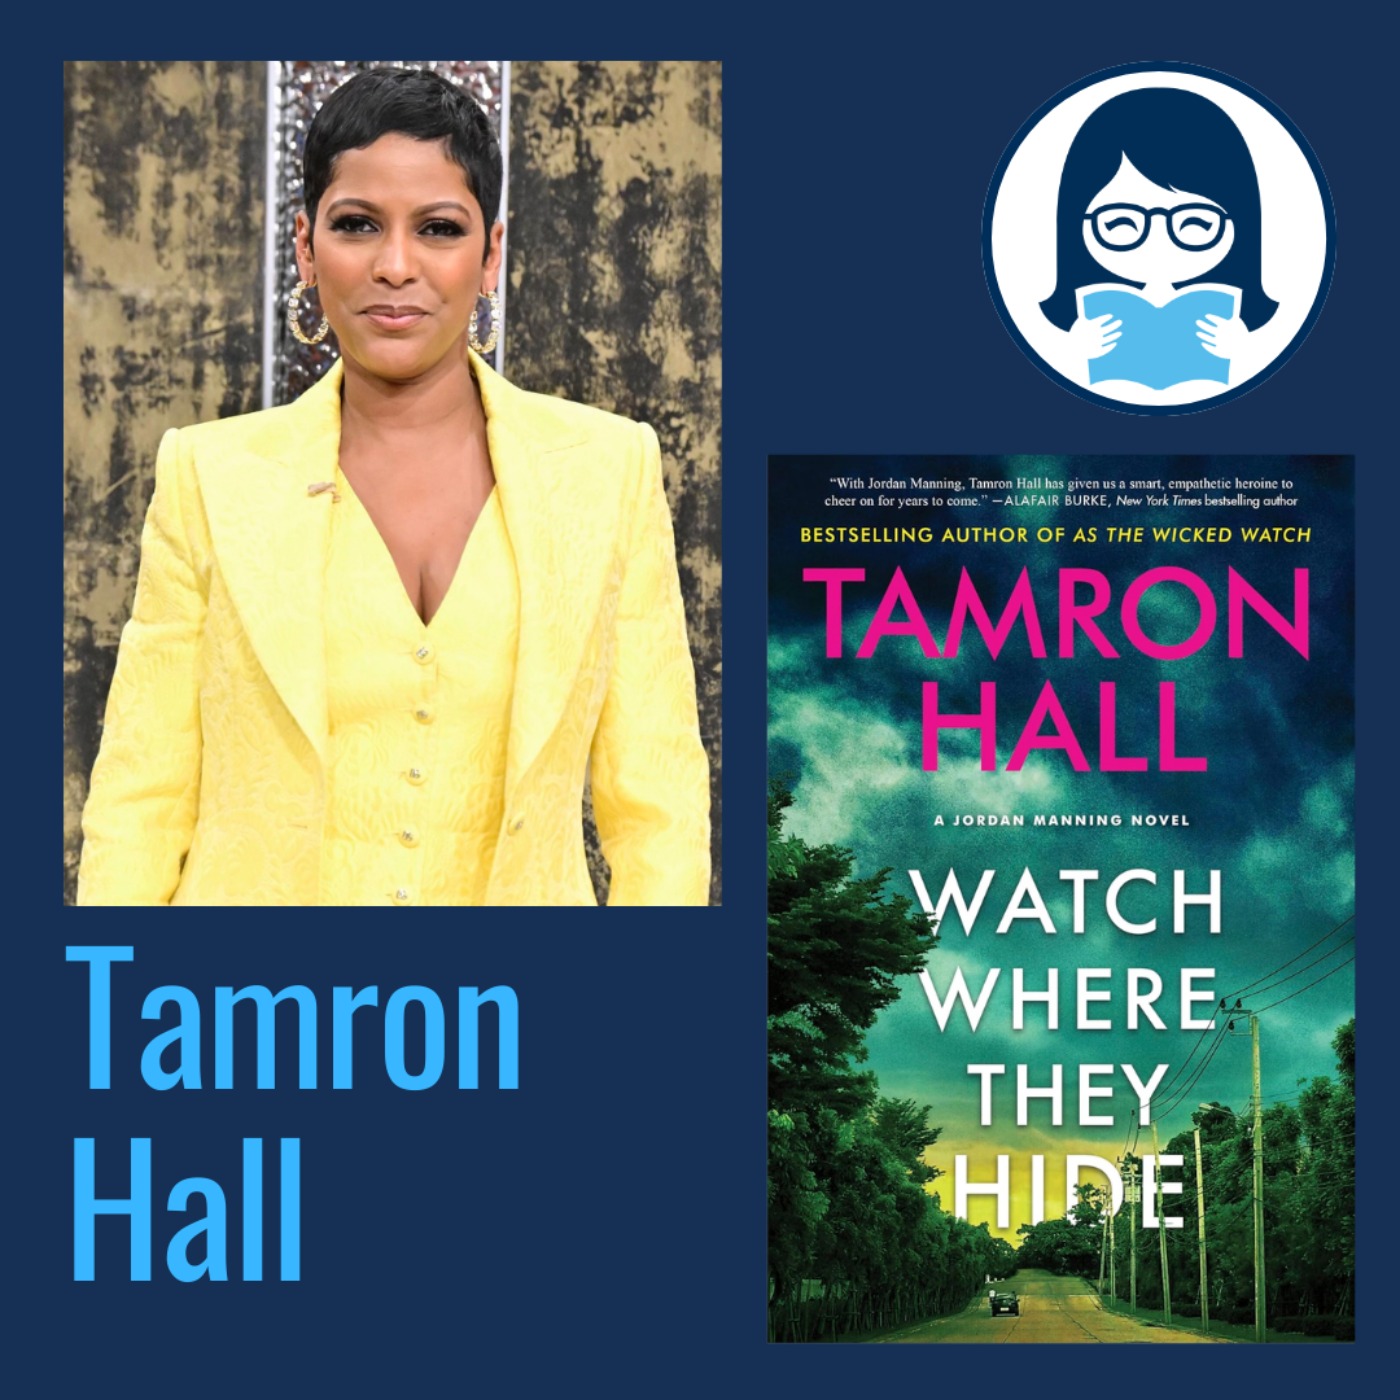 Tamron Hall, WATCH WHERE THEY HIDE: A Jordan Manning Novel